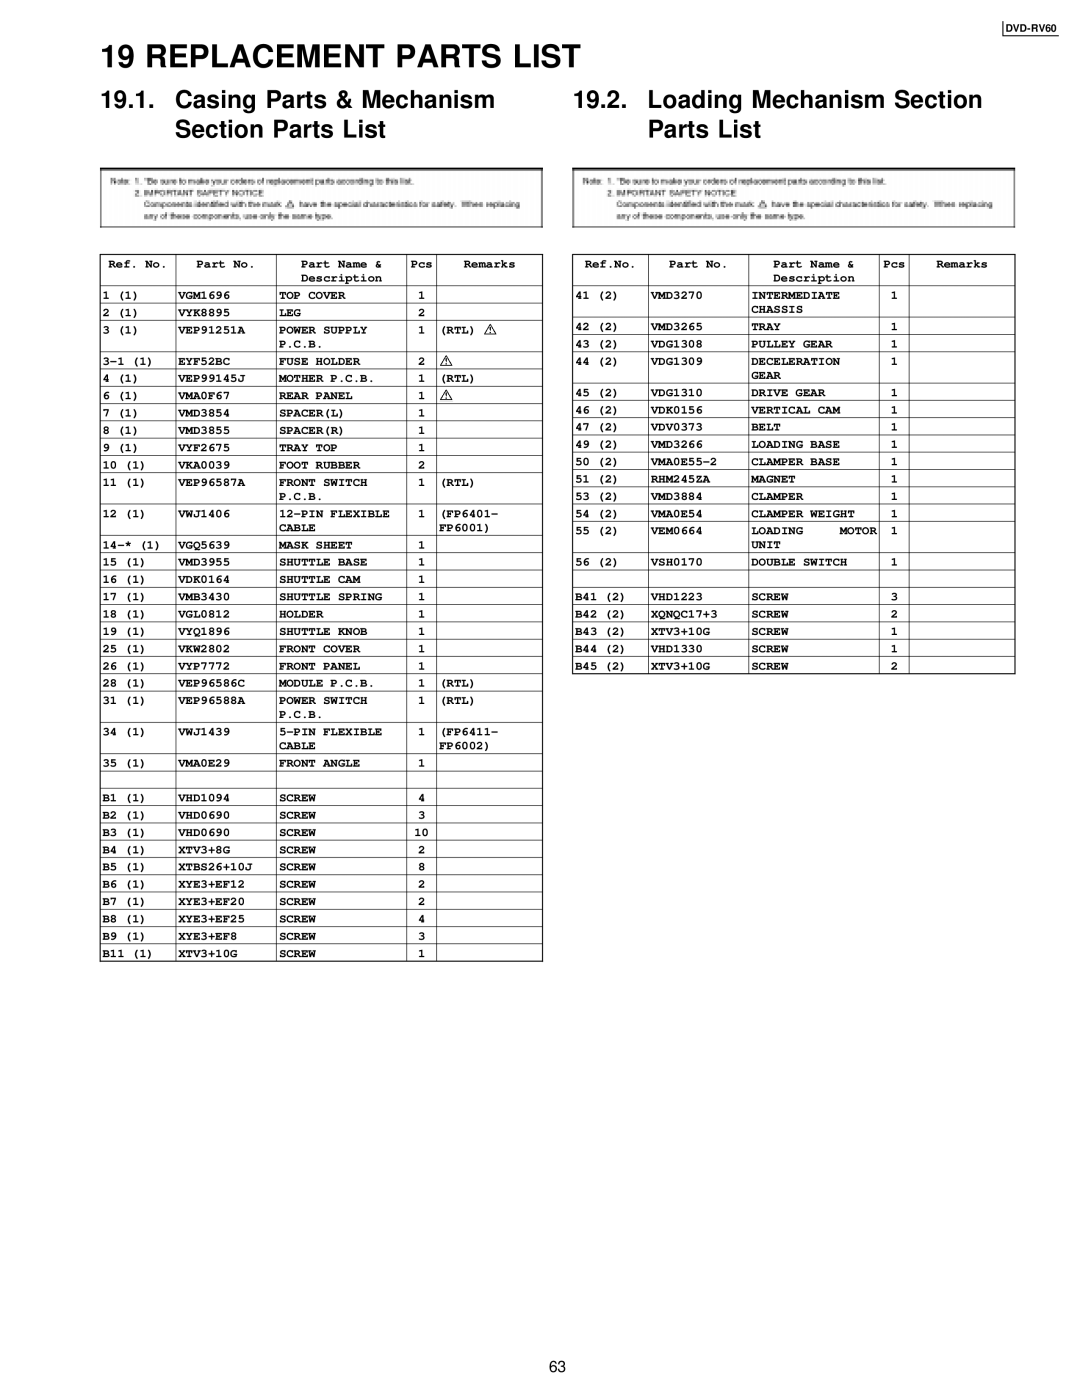 Panasonic DVDRV60 Replacement Parts List, Casing Parts & Mechanism, Loading Mechanism Section, Section Parts List 